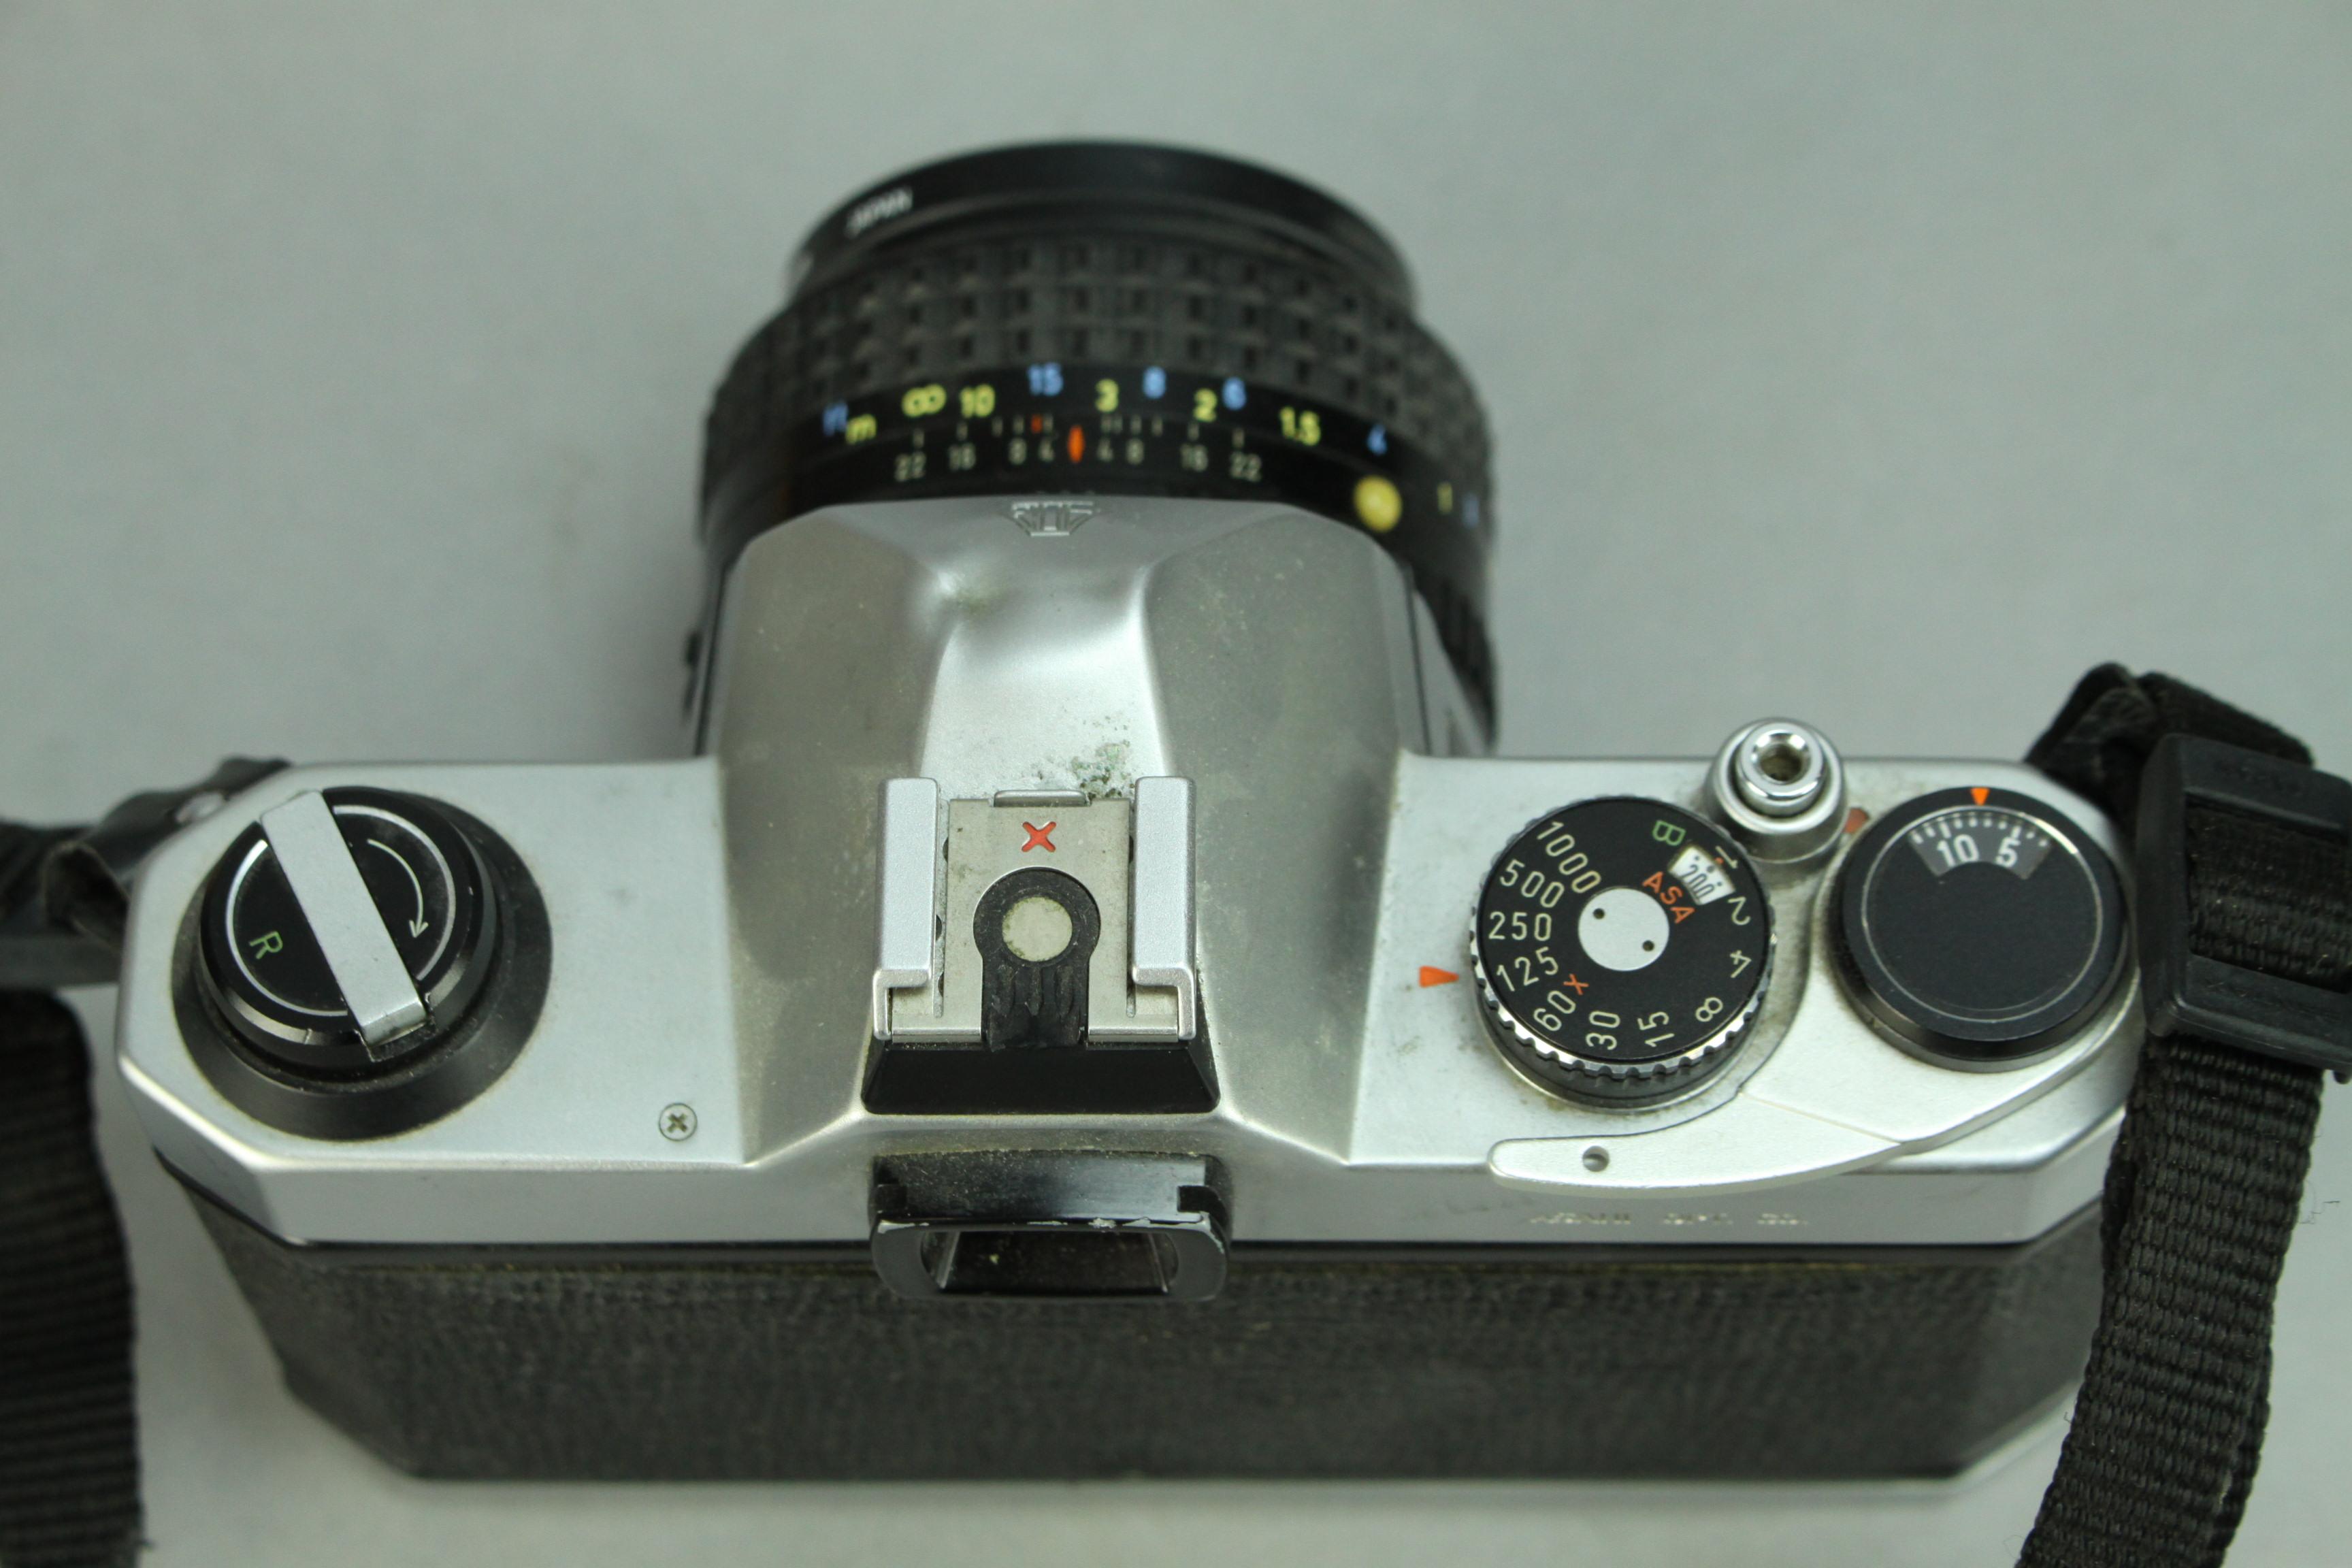 Vintage Pentax 35mm Film Camera Set